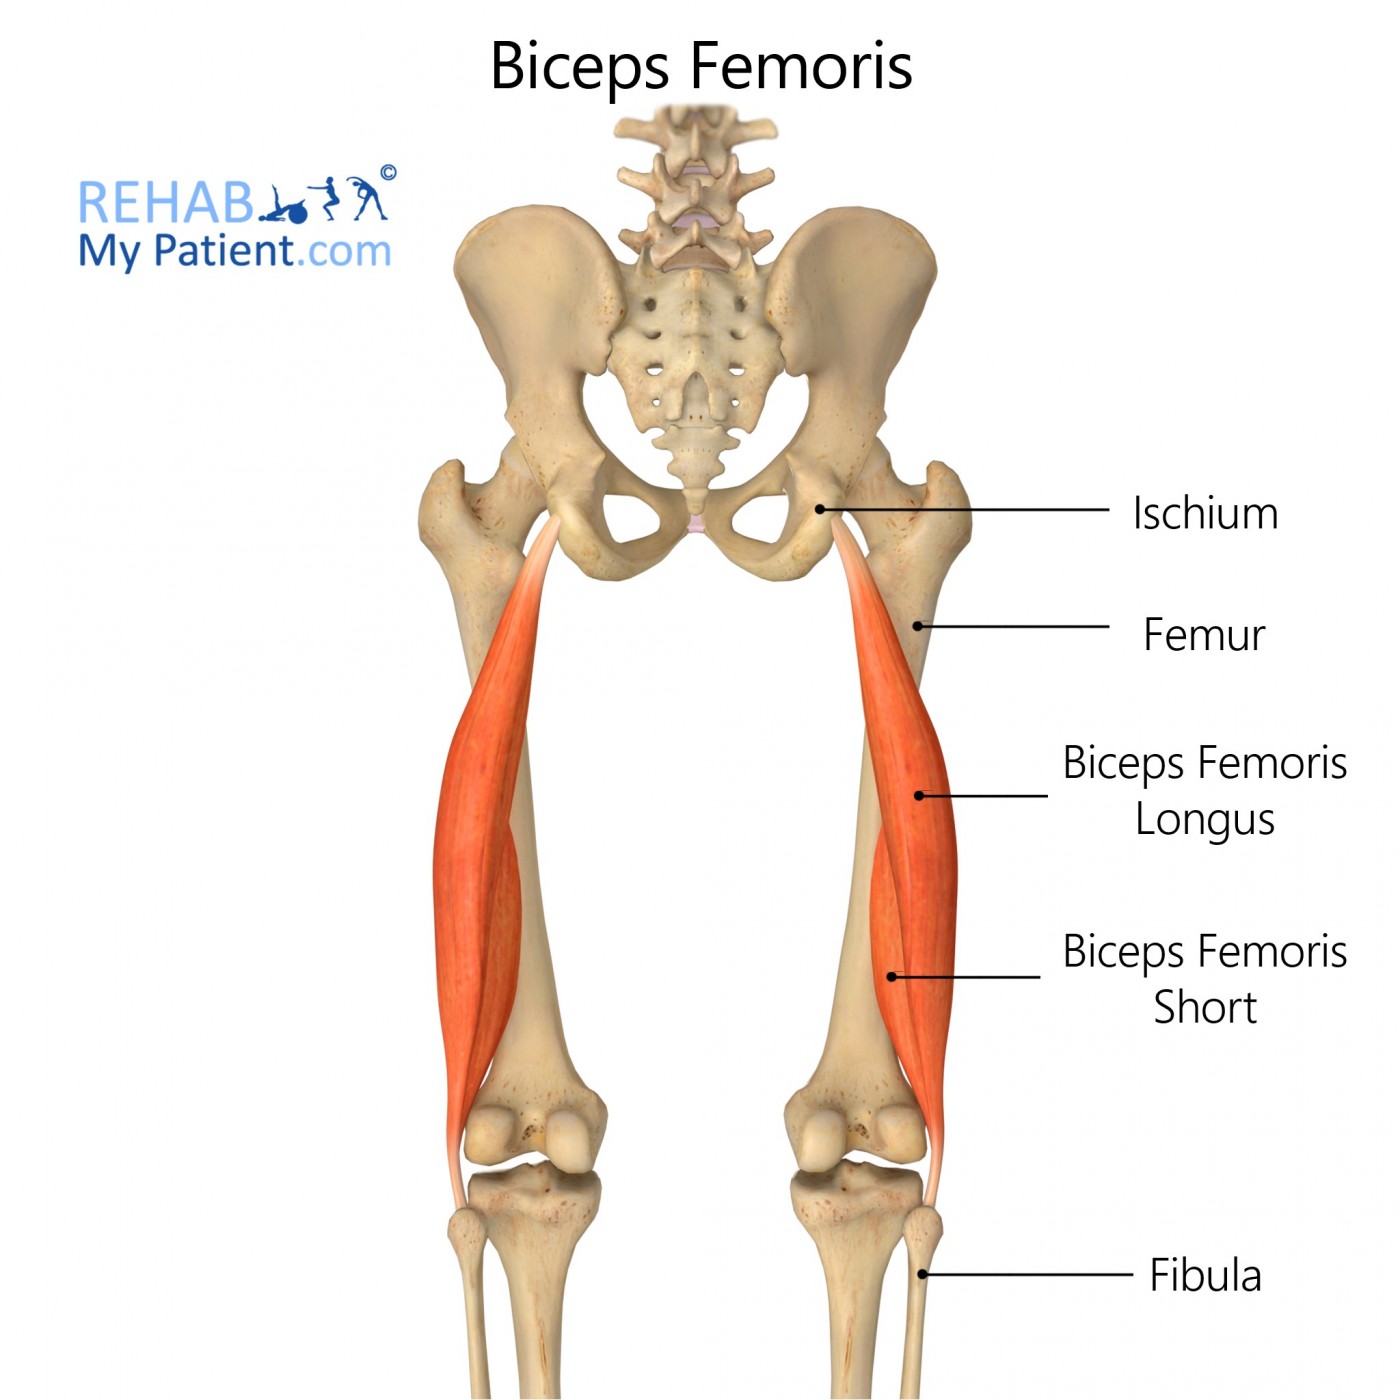 Biceps Femoris Muscle